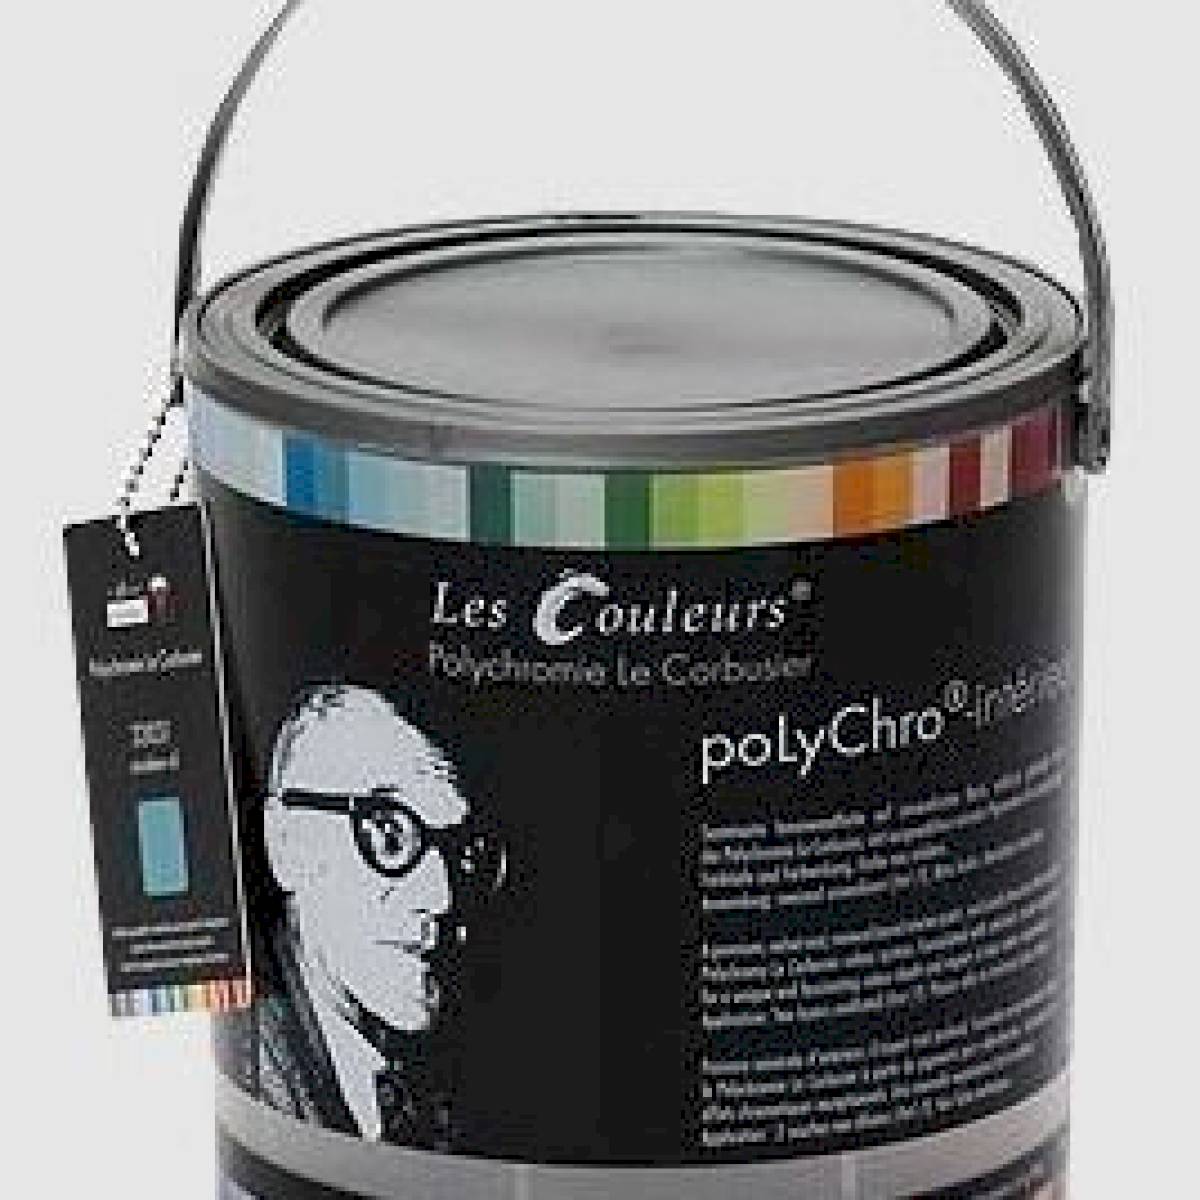 Le Corbusier - Polychro